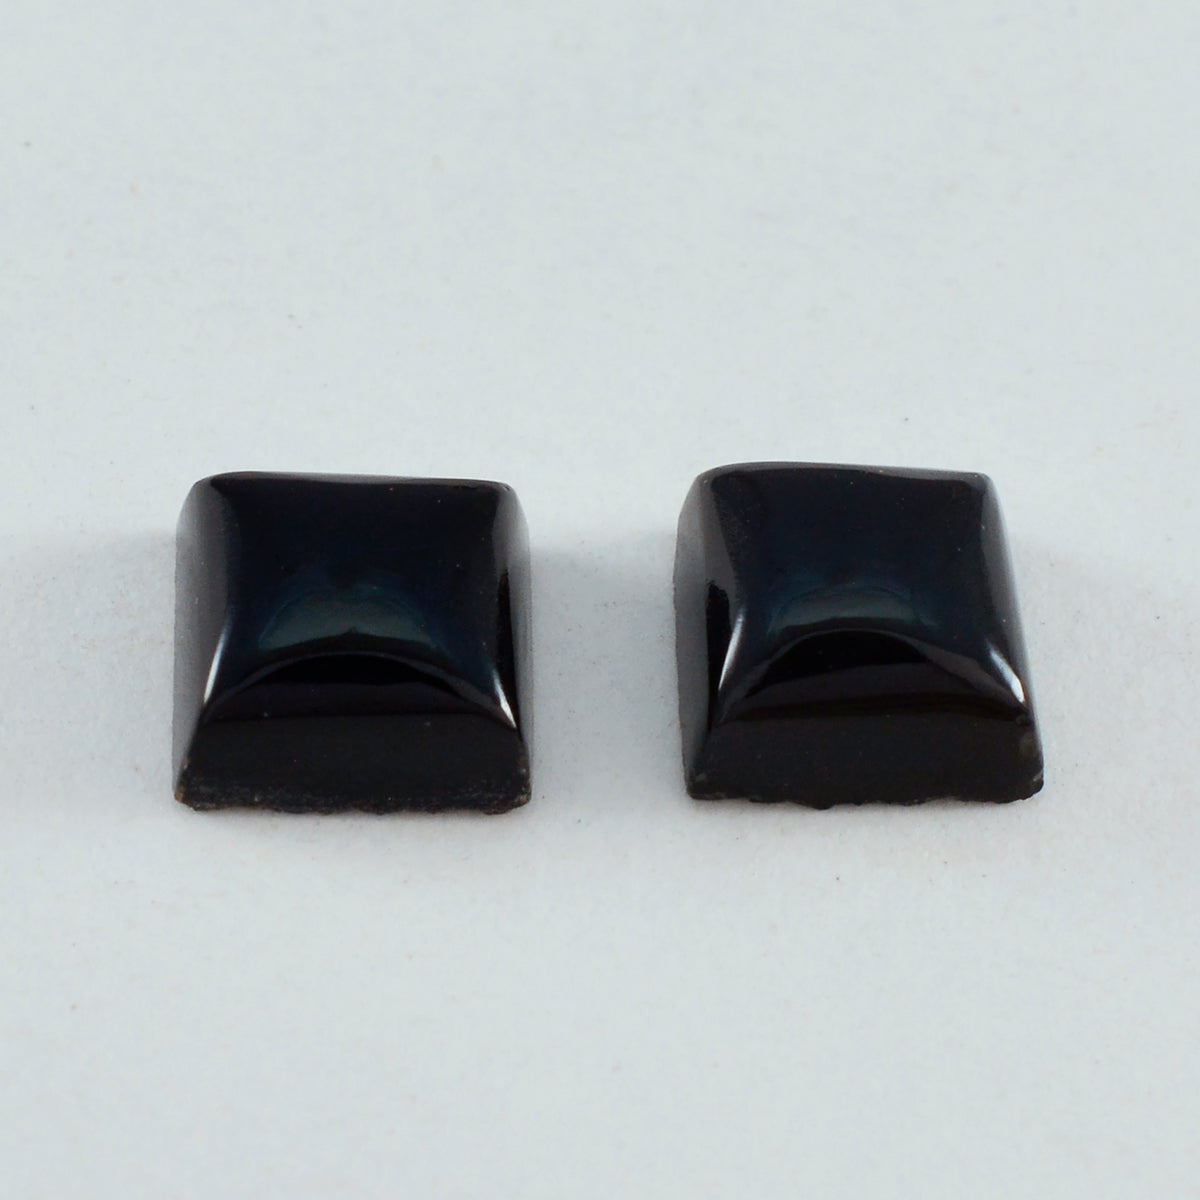 Riyogems 1PC zwarte onyx cabochon 13x13 mm vierkante vorm uitstekende kwaliteit steen